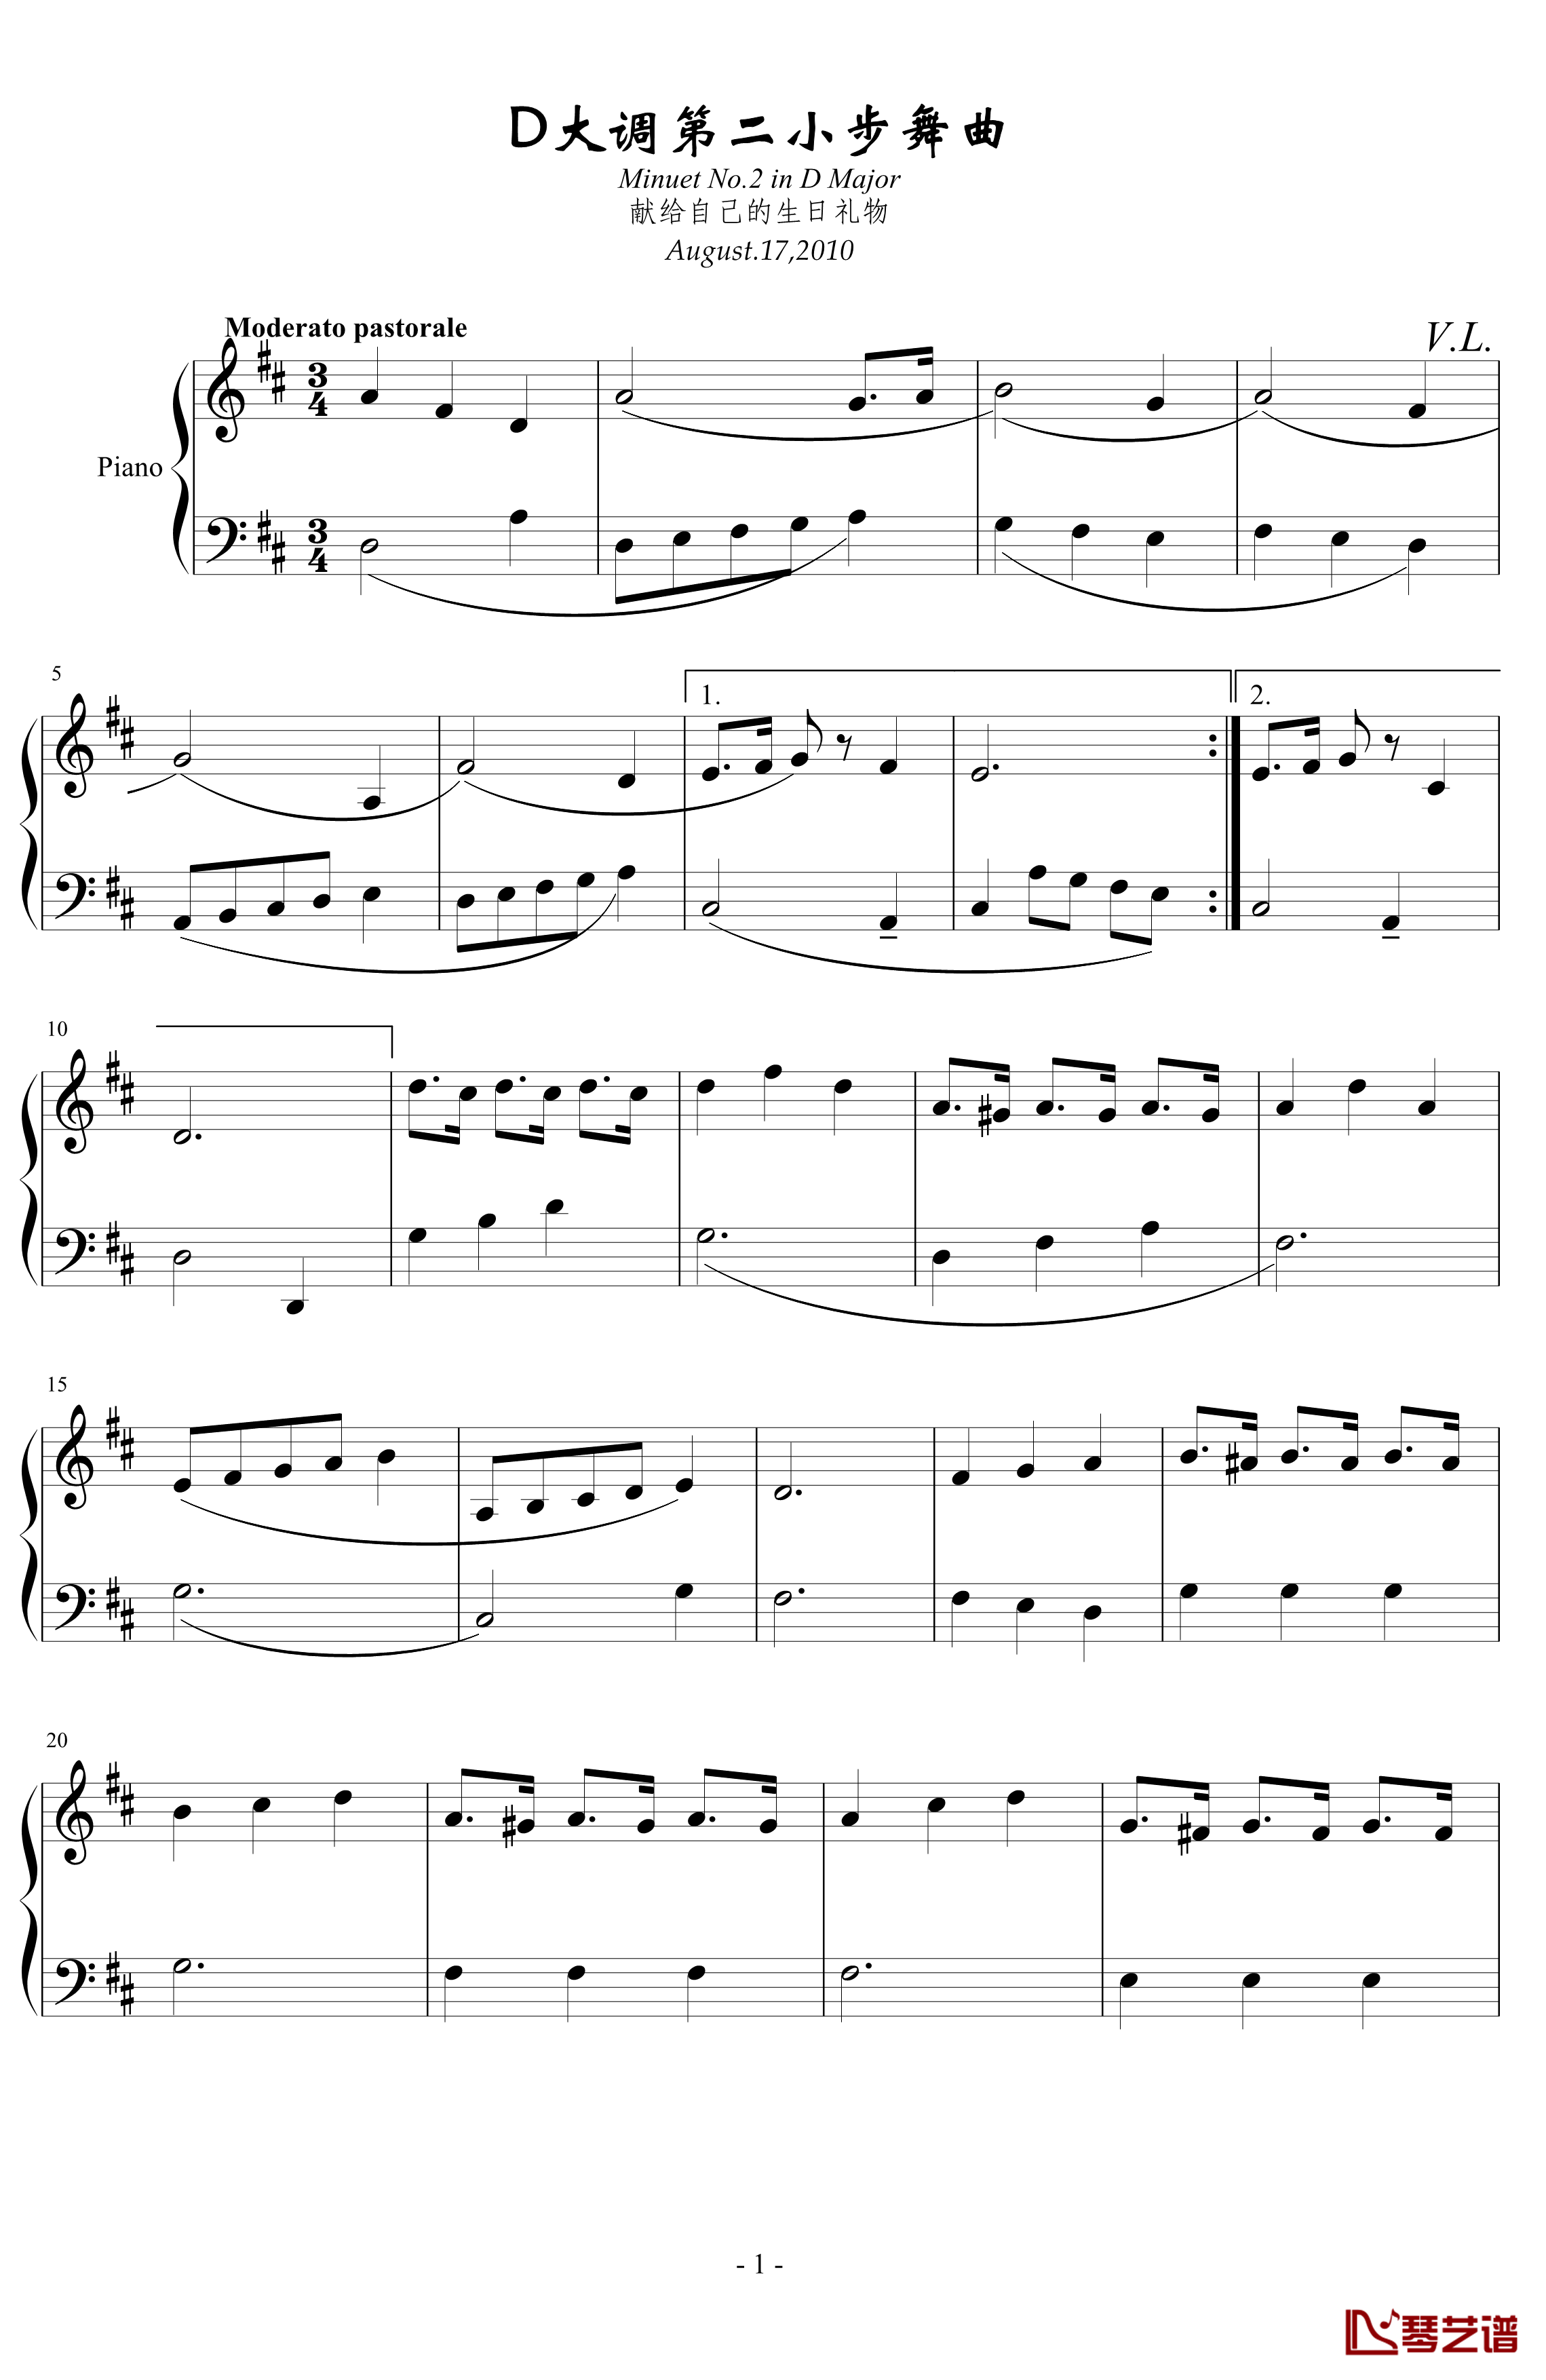 D大调第二小步舞曲钢琴谱-zzmx09161